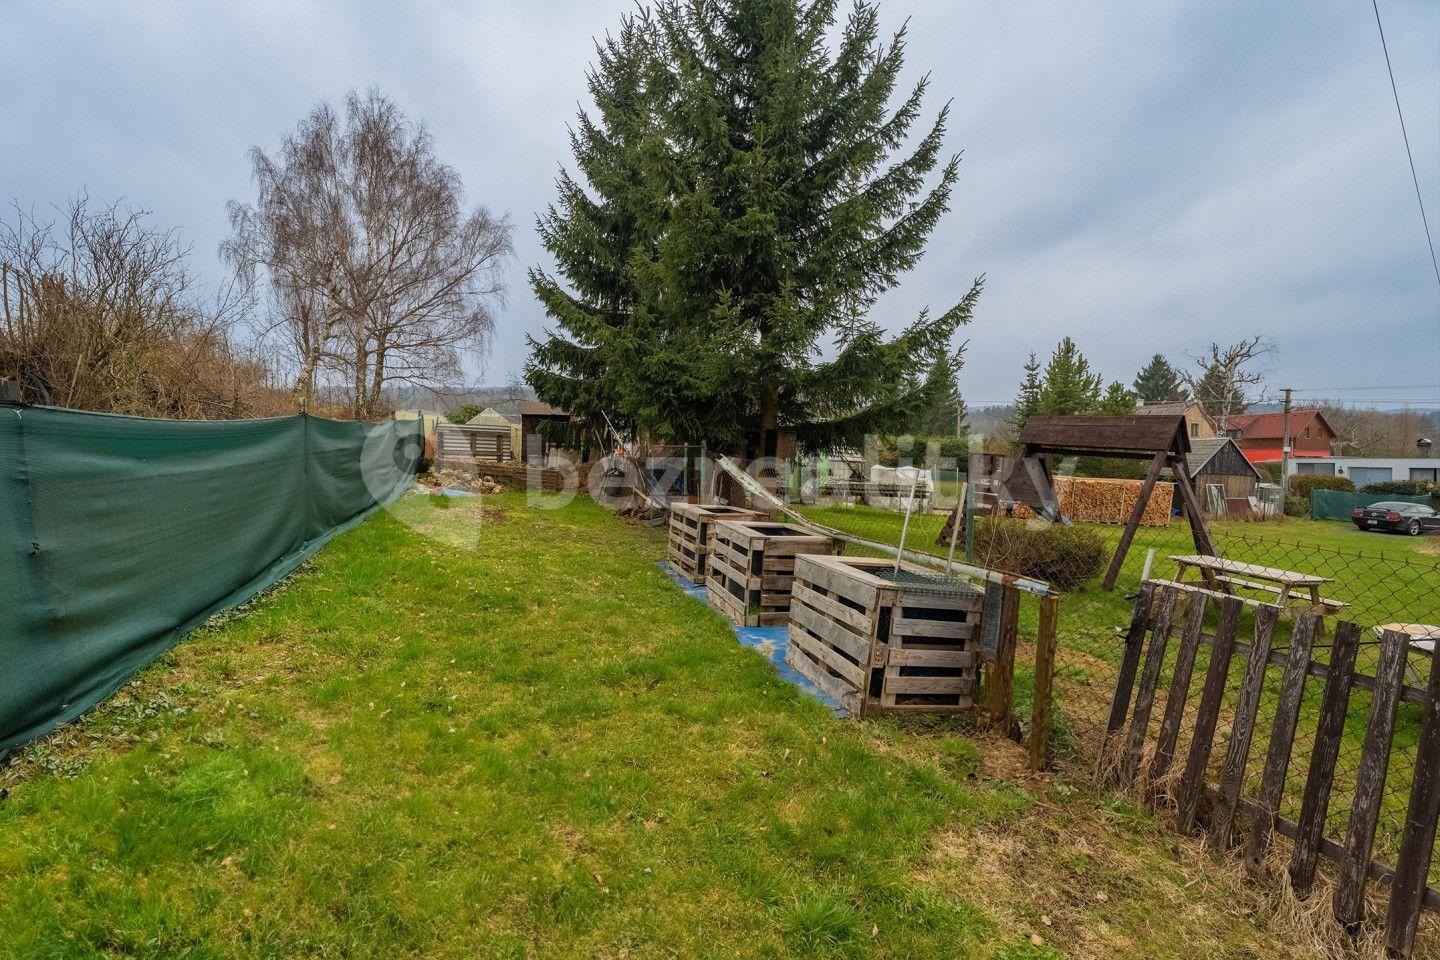 plot for sale, 1,228 m², Varnsdorf, Ústecký Region